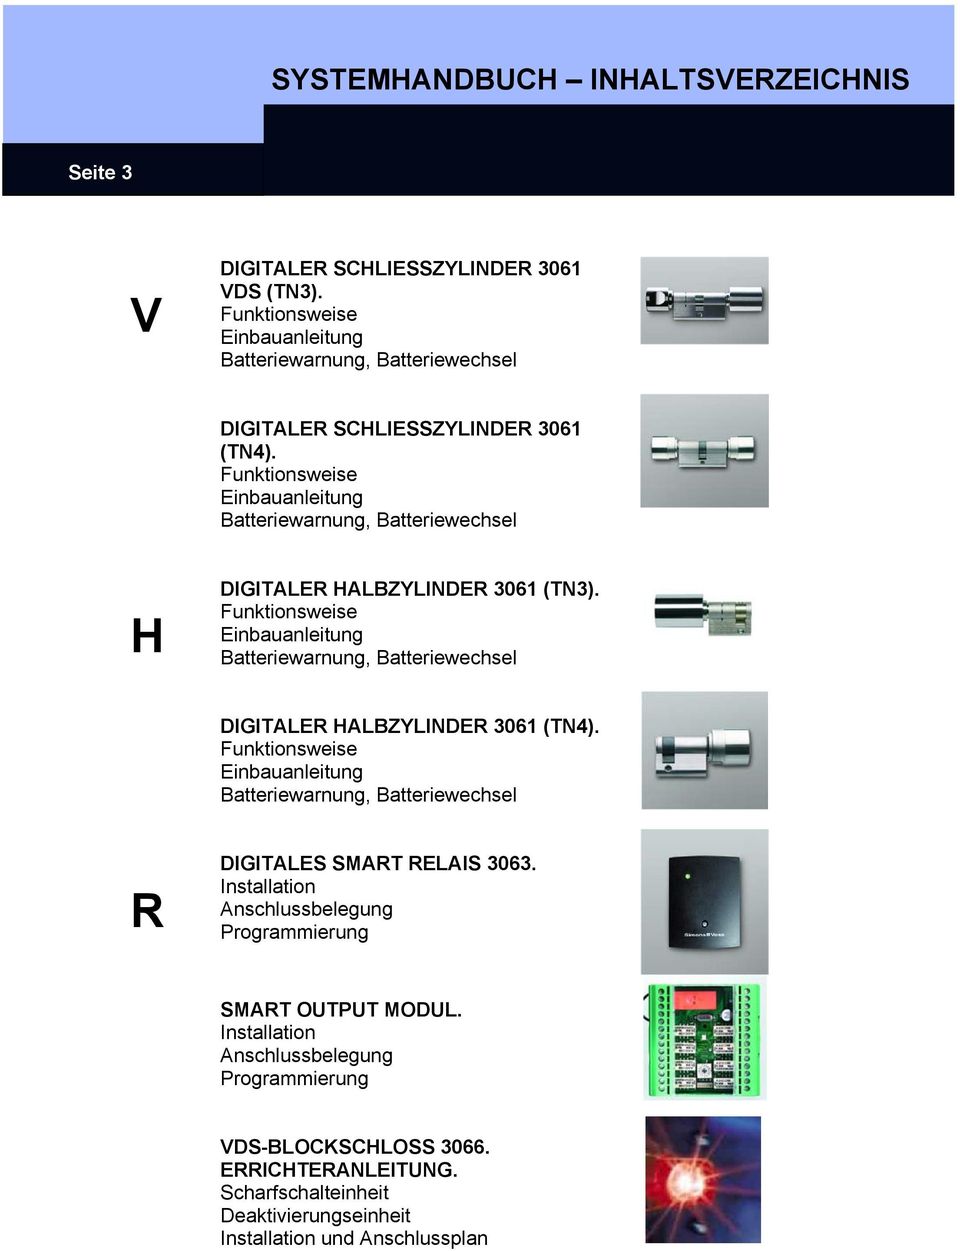 Funktionsweise Einbauanleitung Batteriewarnung, Batteriewechsel H DIGITALER HALBZYLINDER 3061 (TN3).